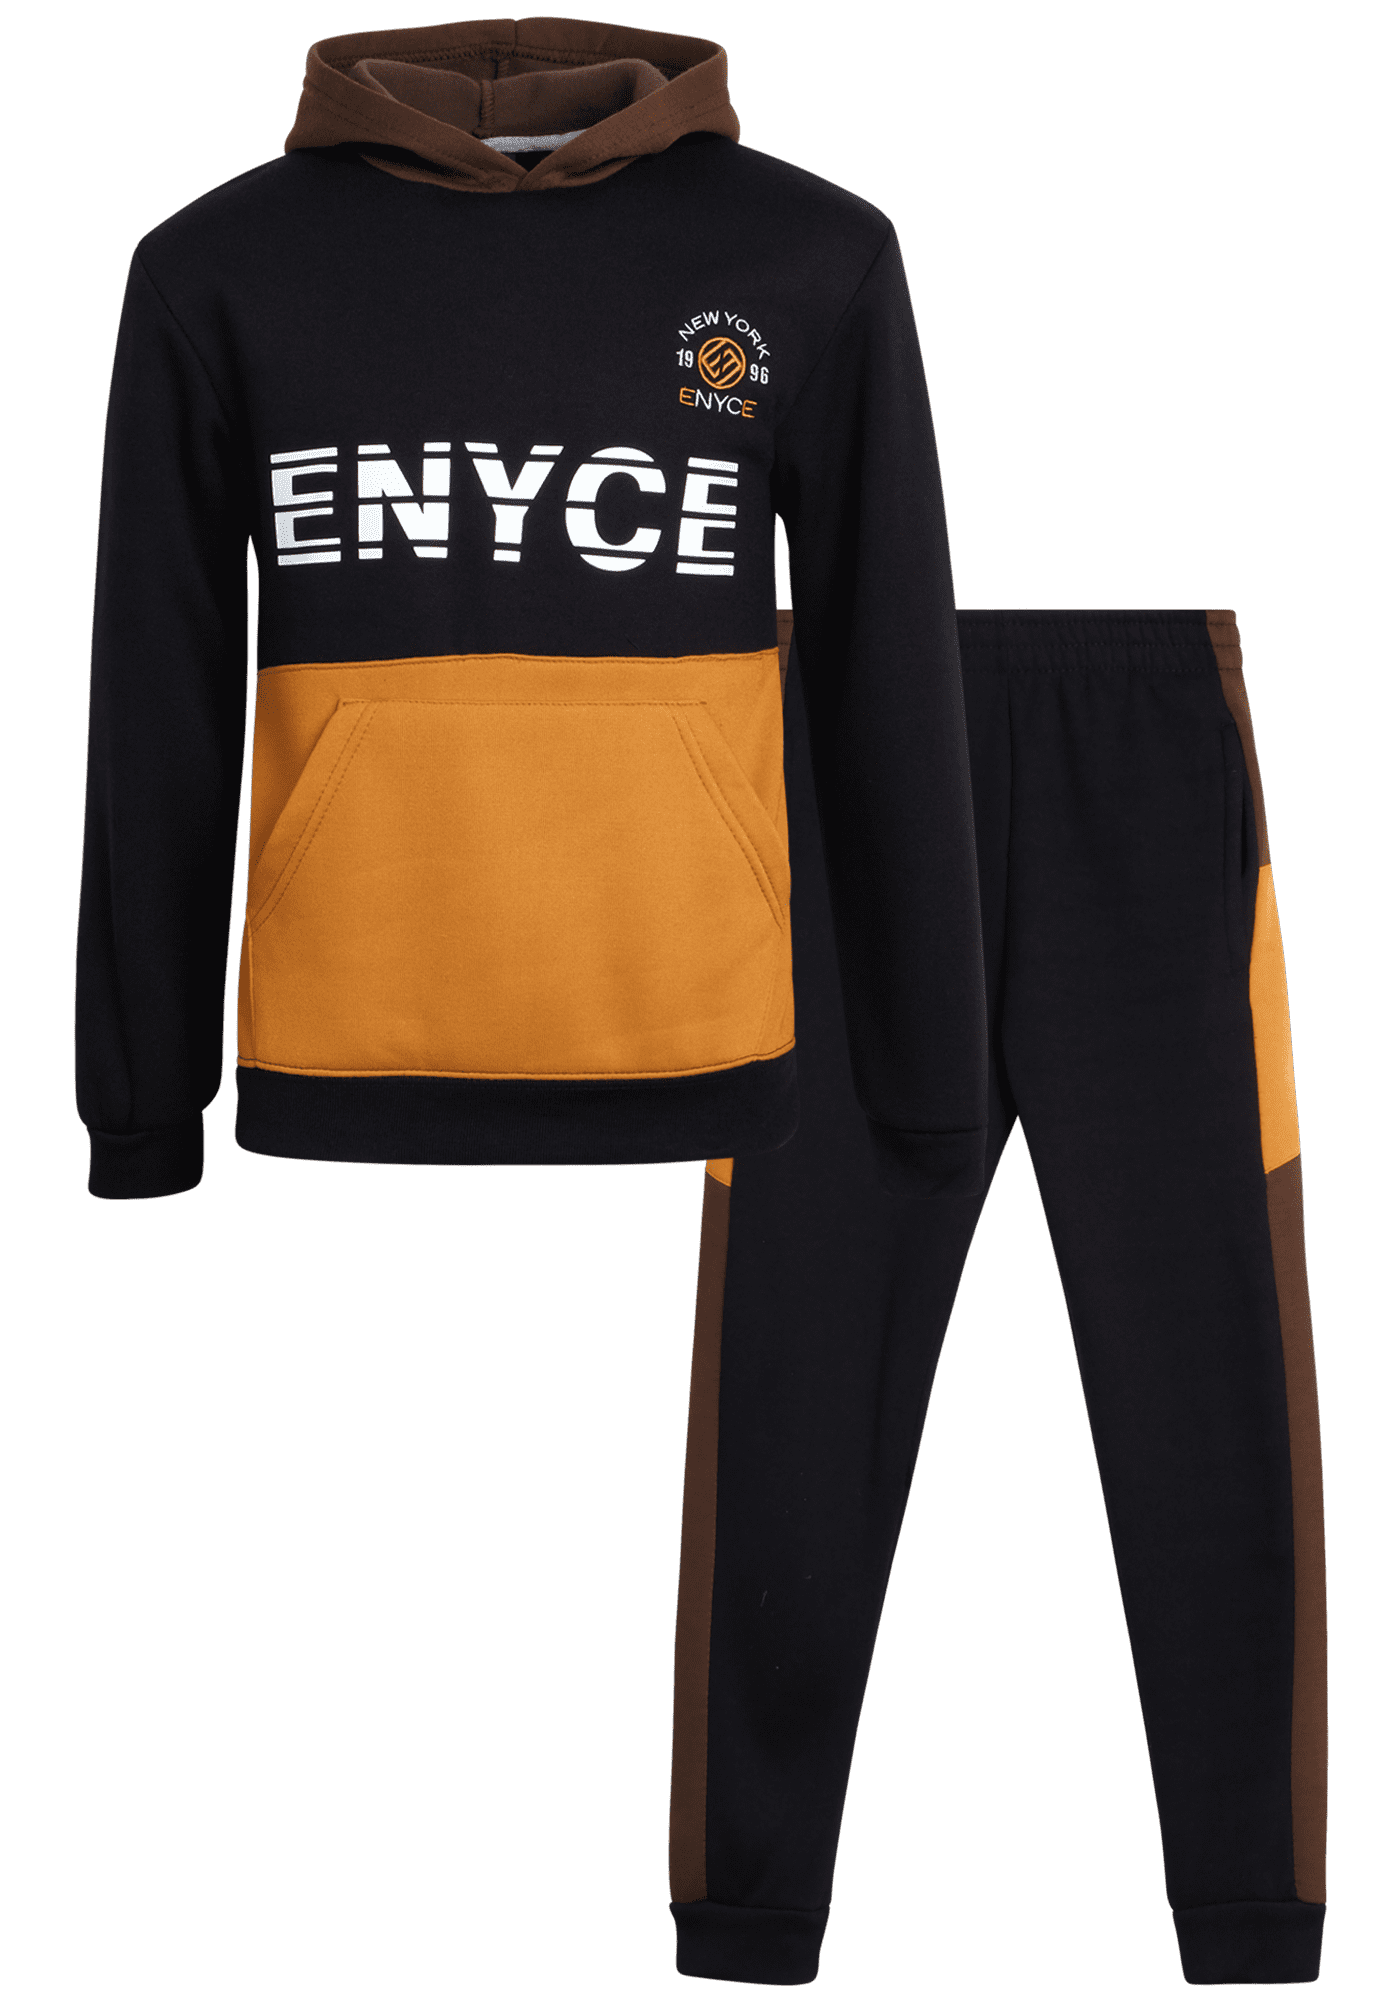 Enyce Boys' Sweatsuit Set - 2 Piece Fleece Zip Hoodie Sweatshirt and ...